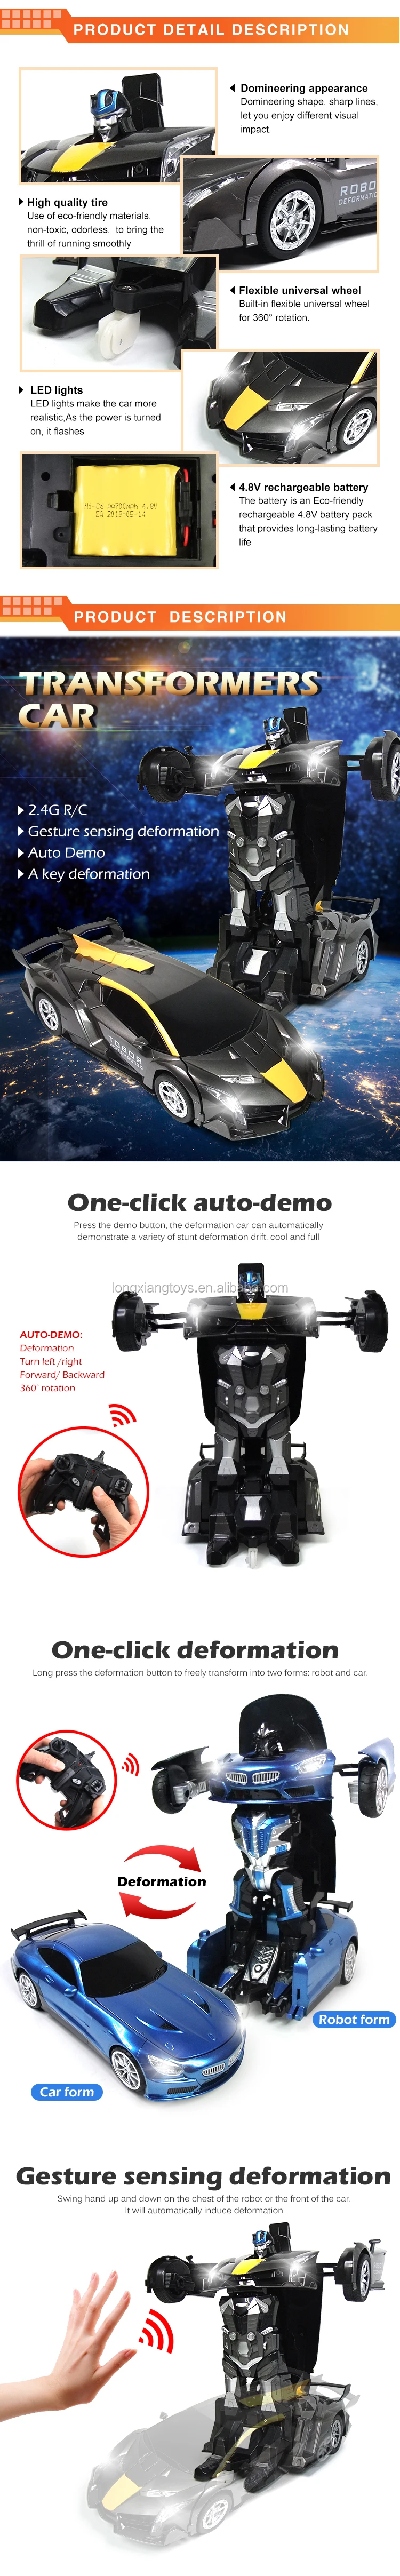 Transform Car Robot Deformation  2 in 1 RC Robot  Model Car Toys